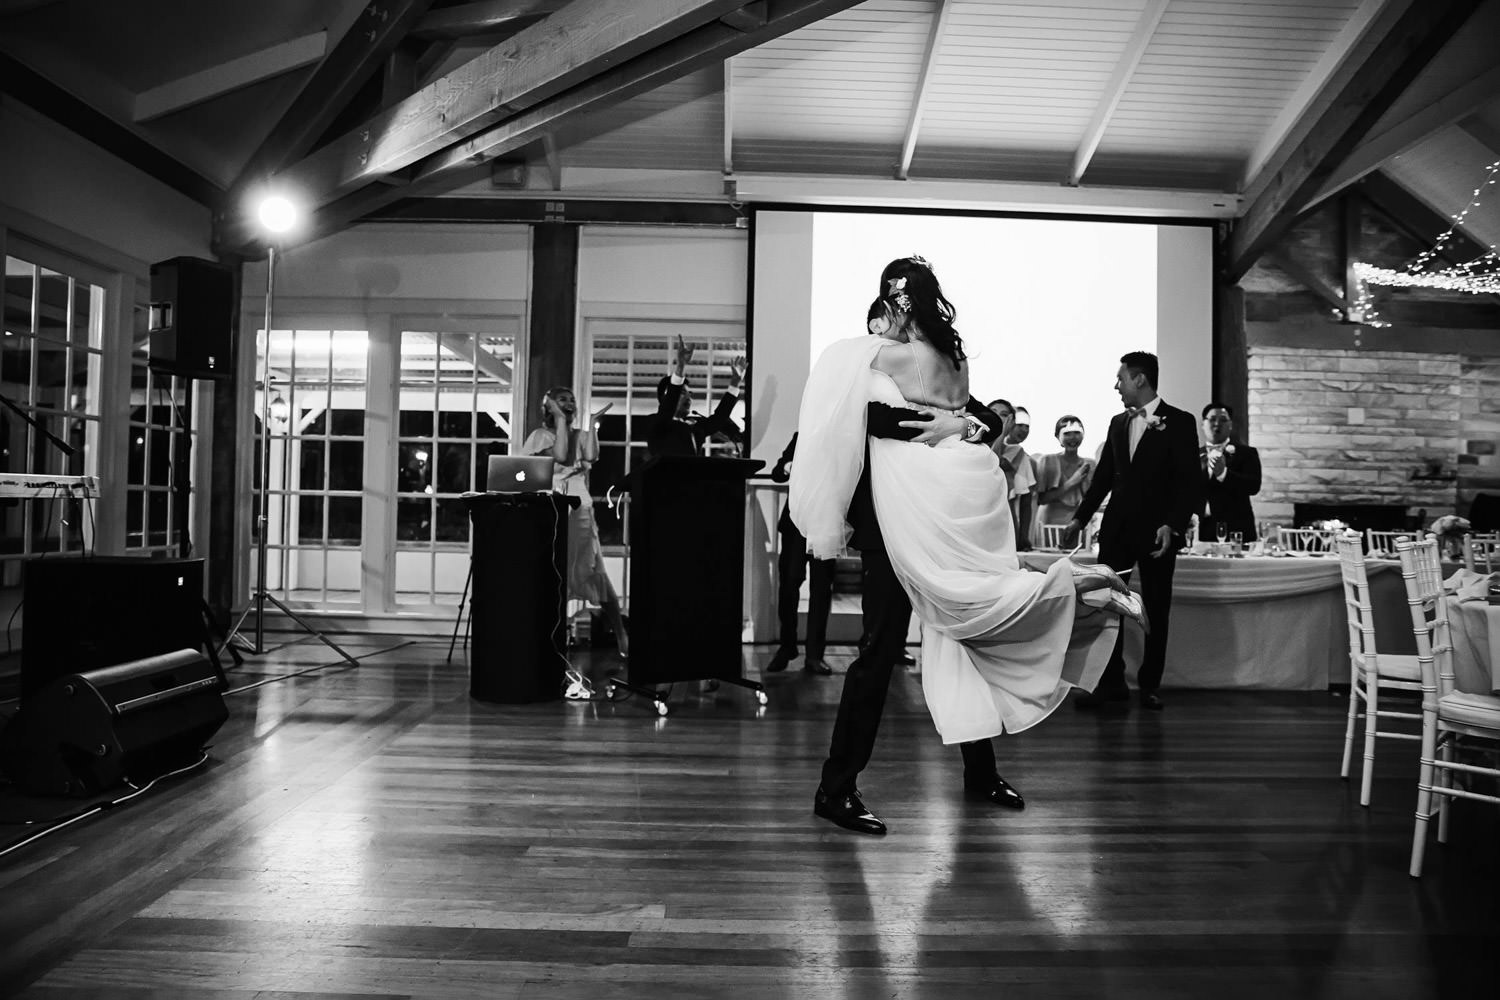 dance-floor-natural, fun, romantic-wedding-photography at Sanctuary Cove-QuinceandMulberryStudios